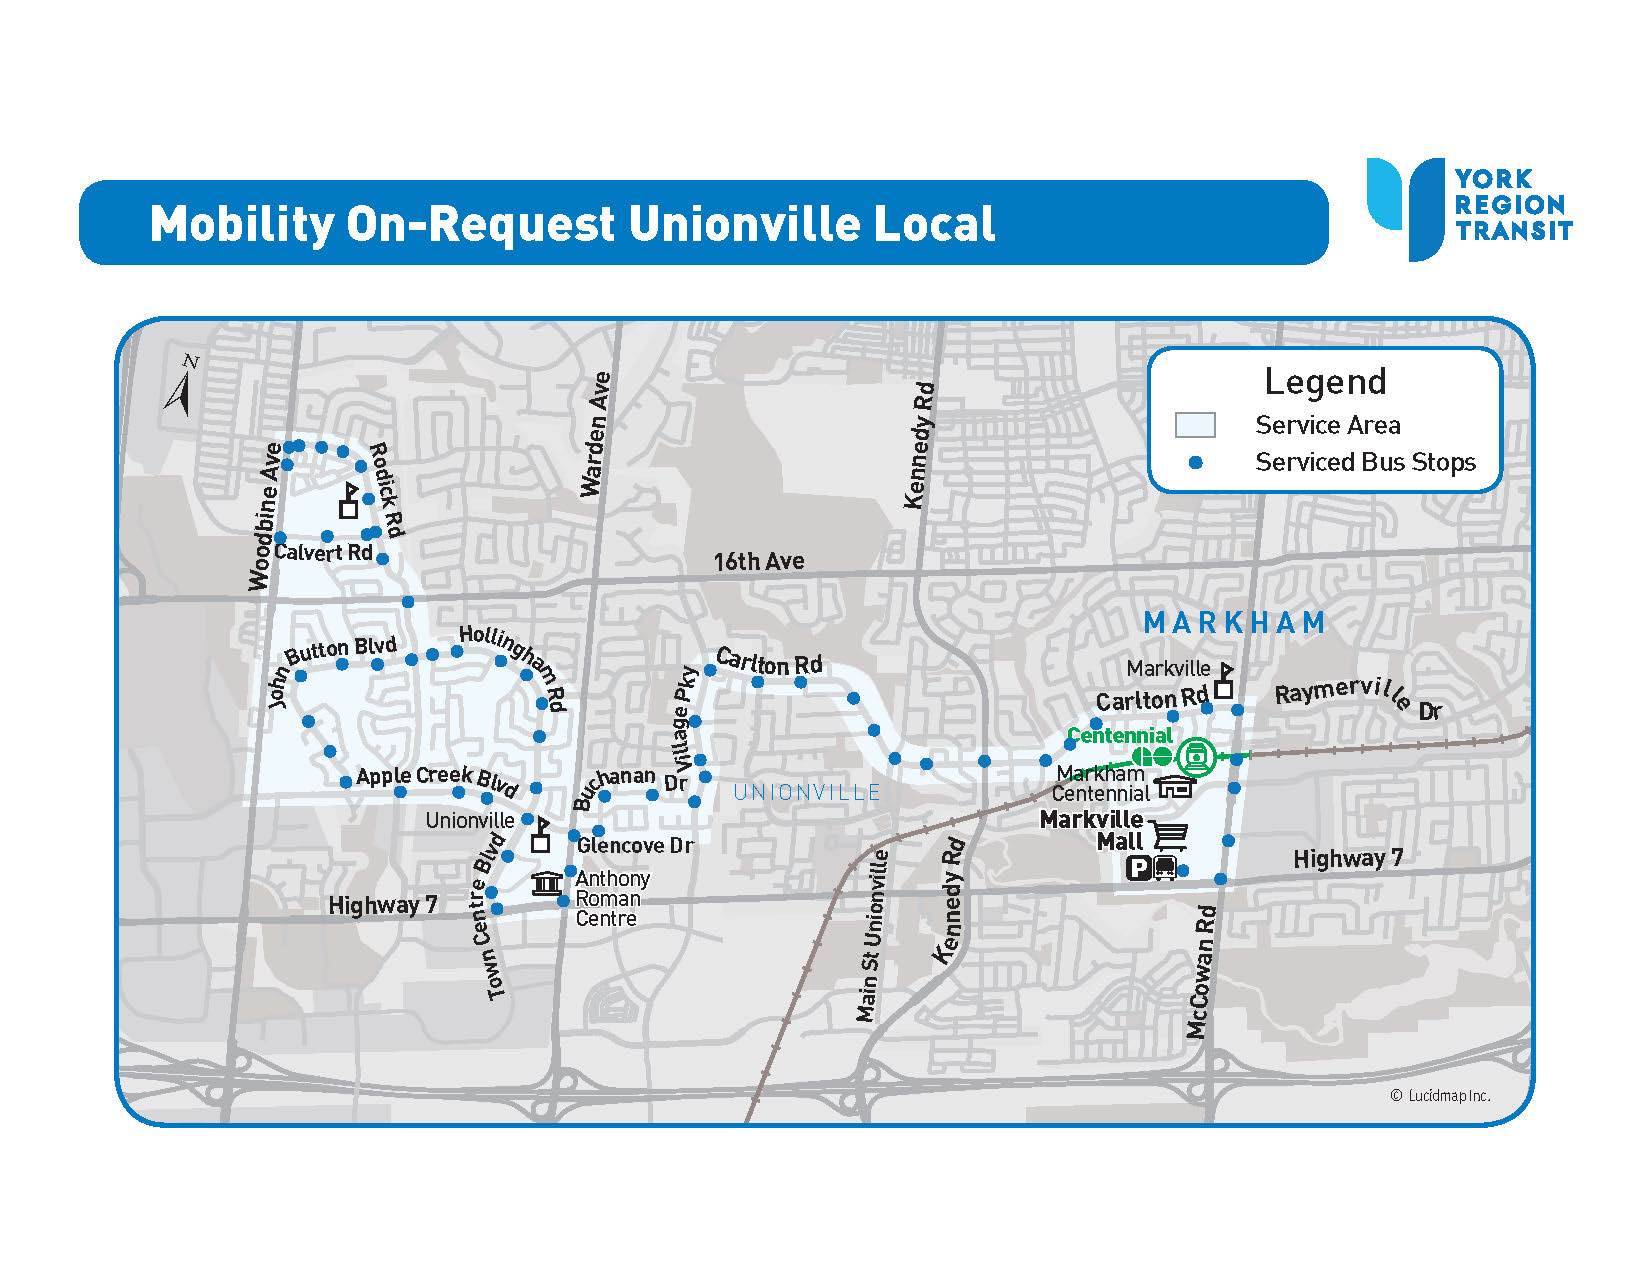 MOR Unionville Local service area map